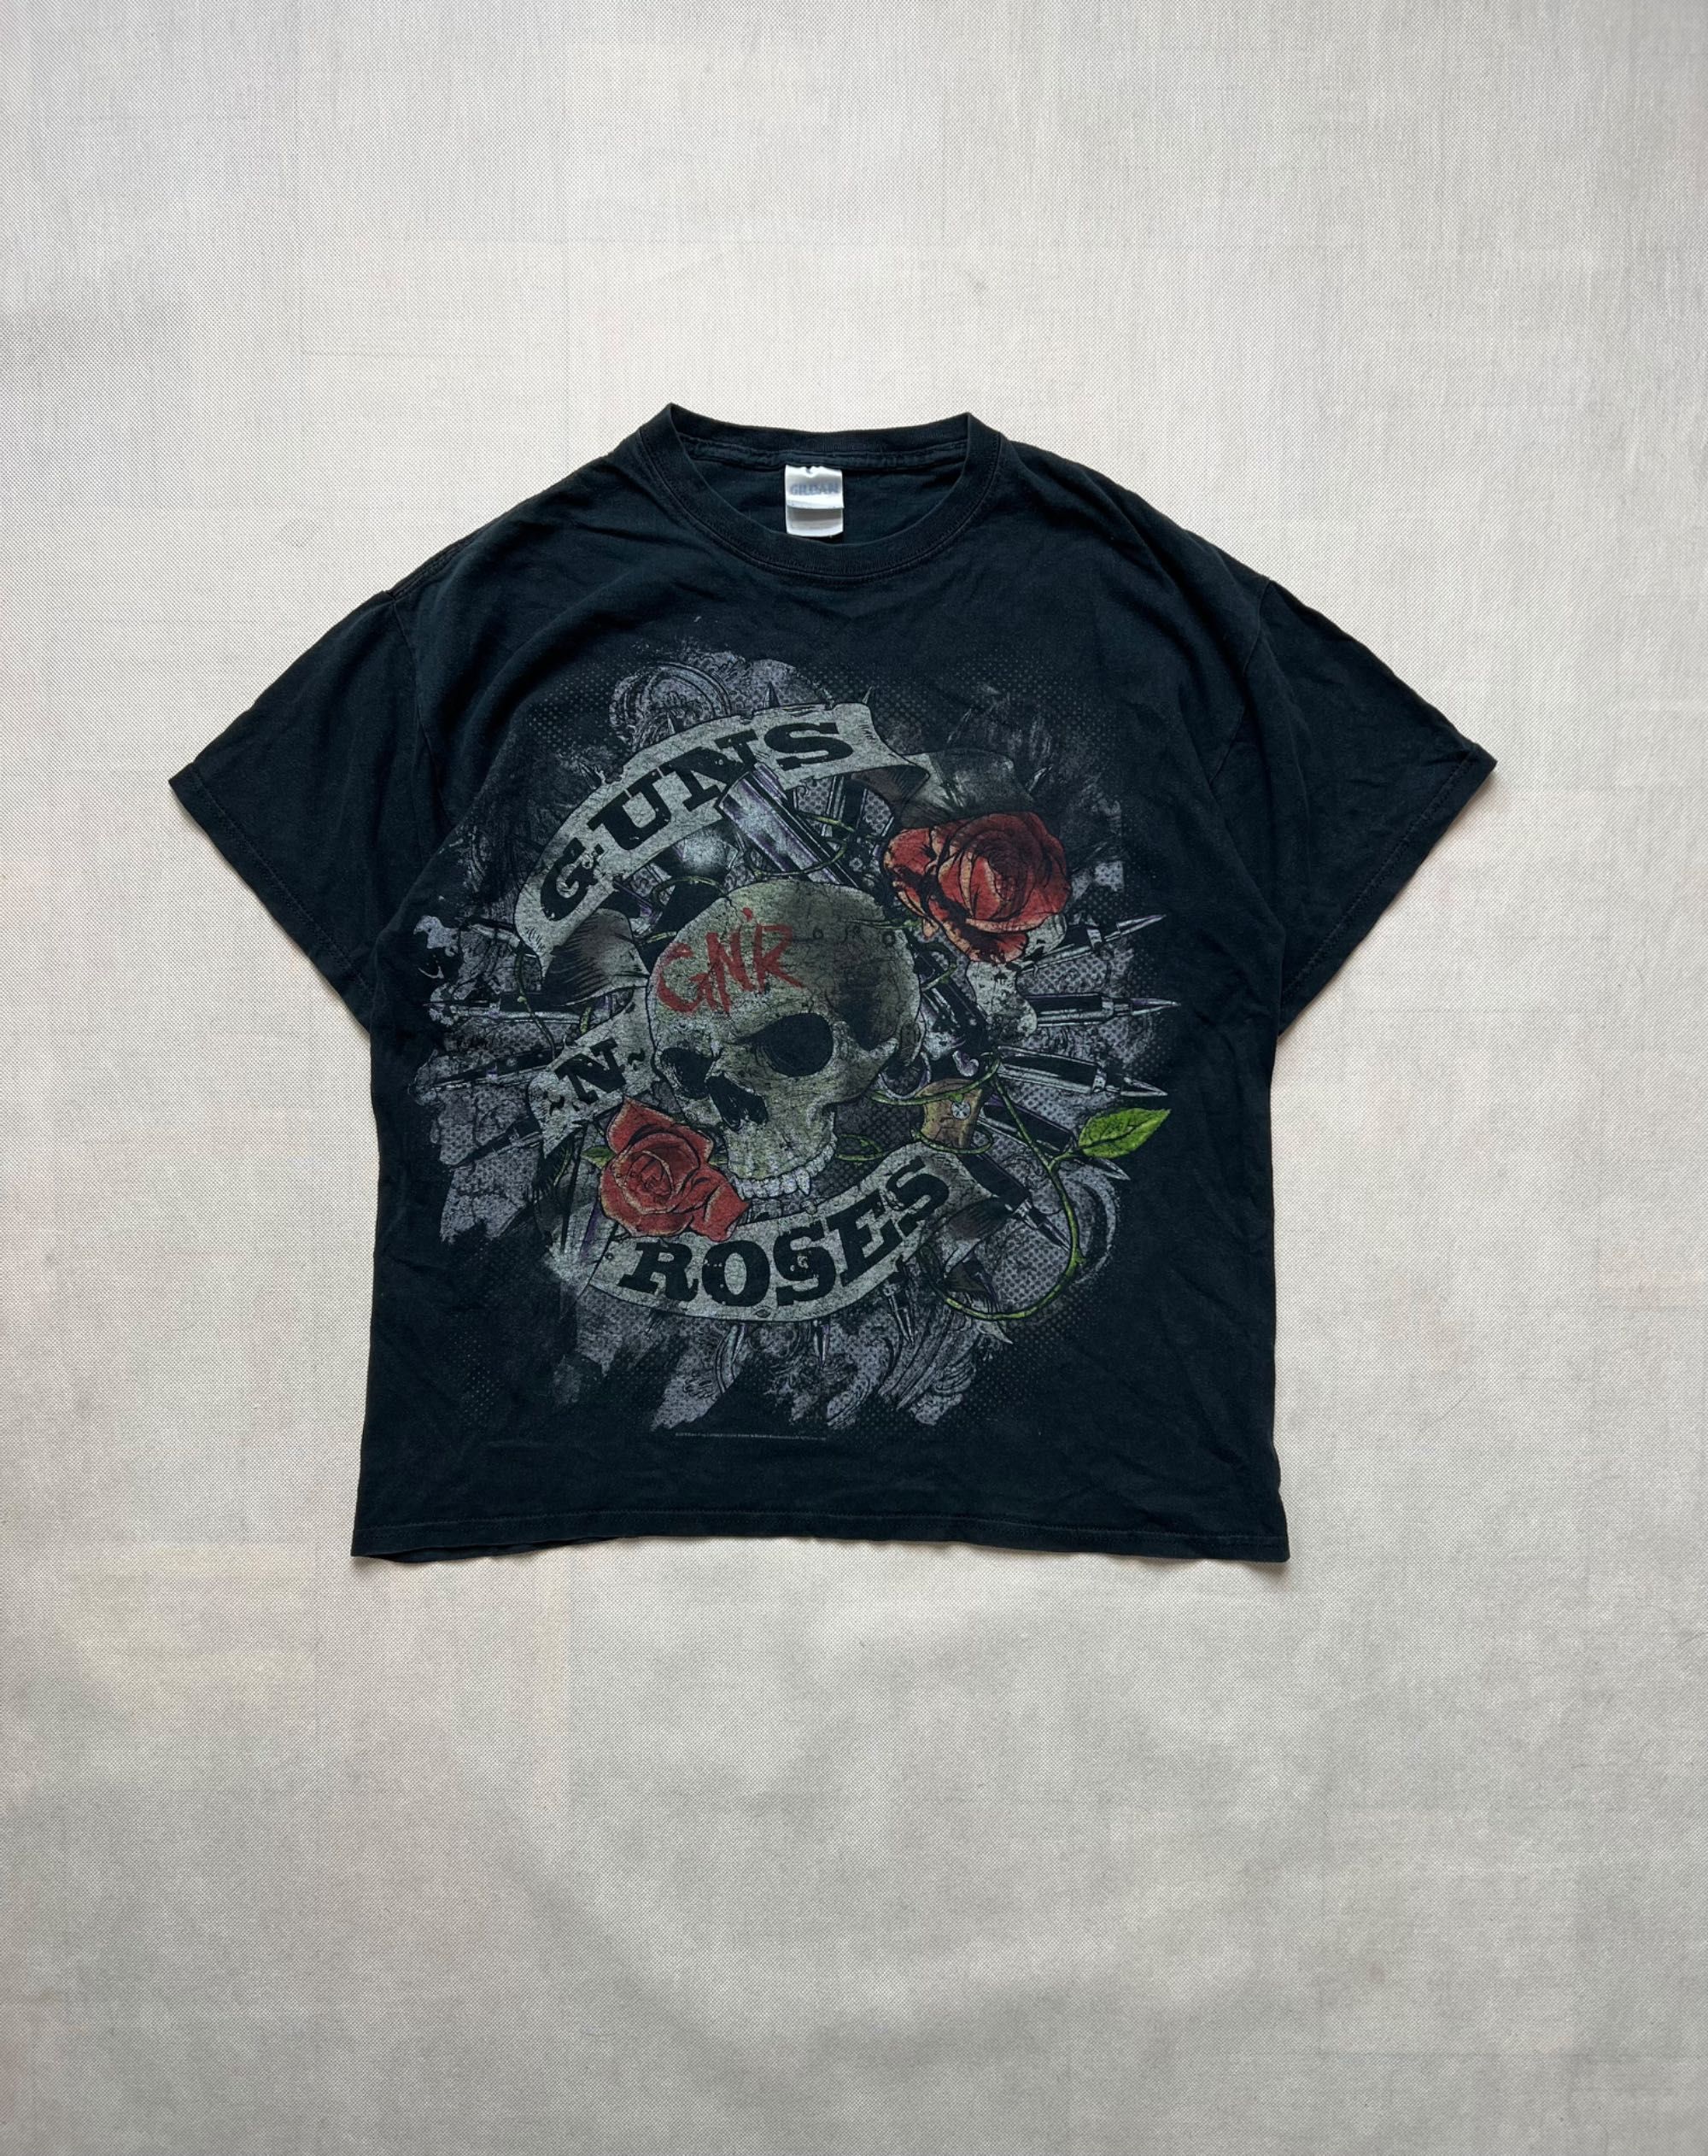 Tshirt koszulka Guns N’ Roses skulls skeleton logo vintage 2009